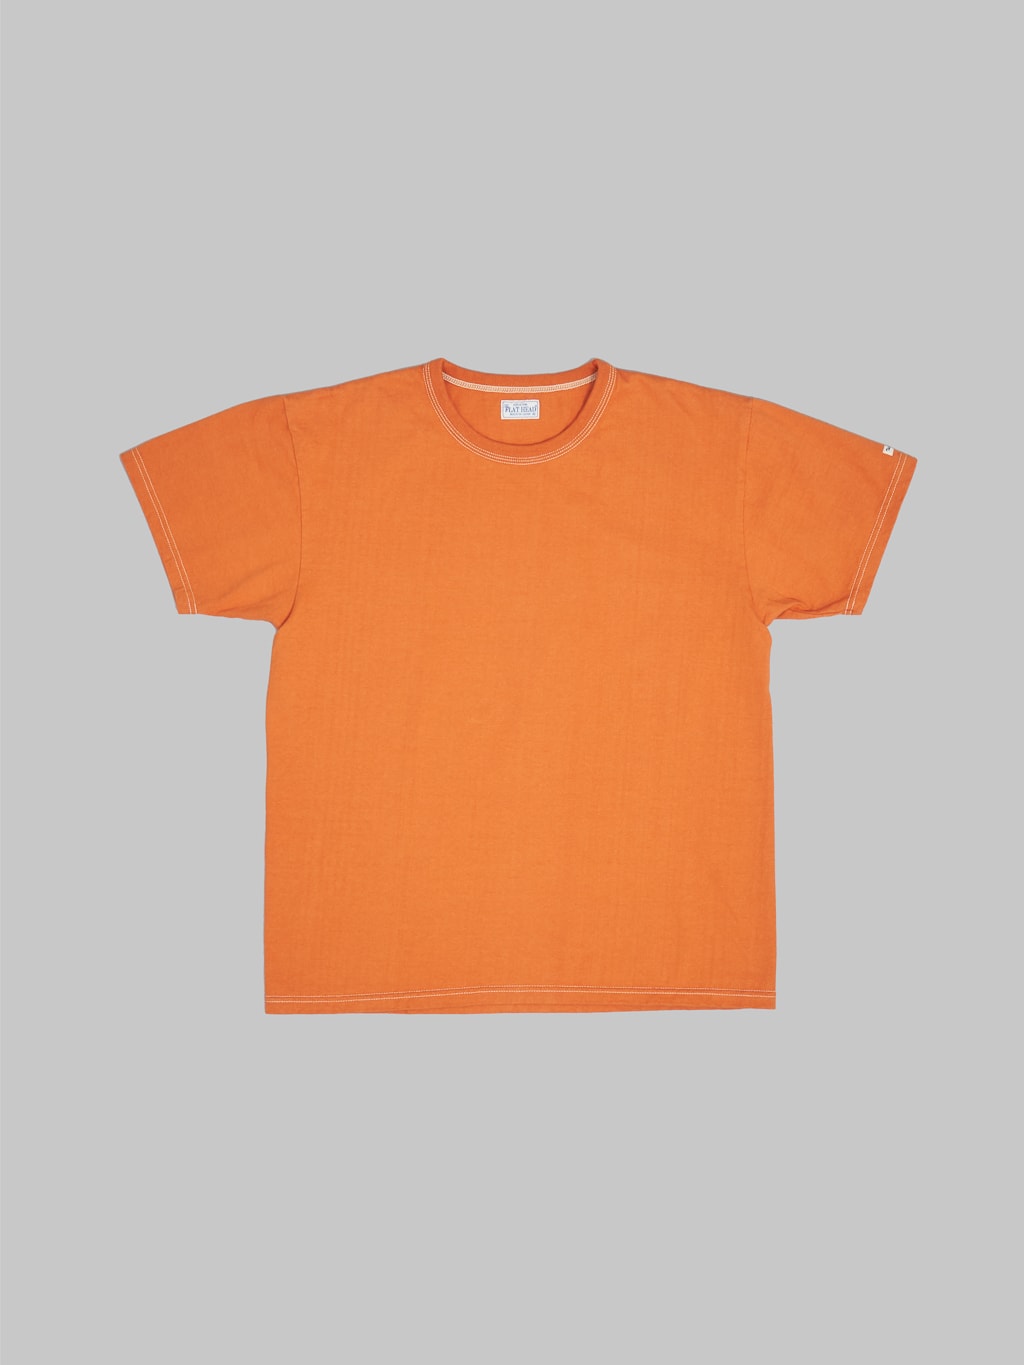 The Flat Head Loopwheeled Heavyweight Plain TShirt Dark Orange front